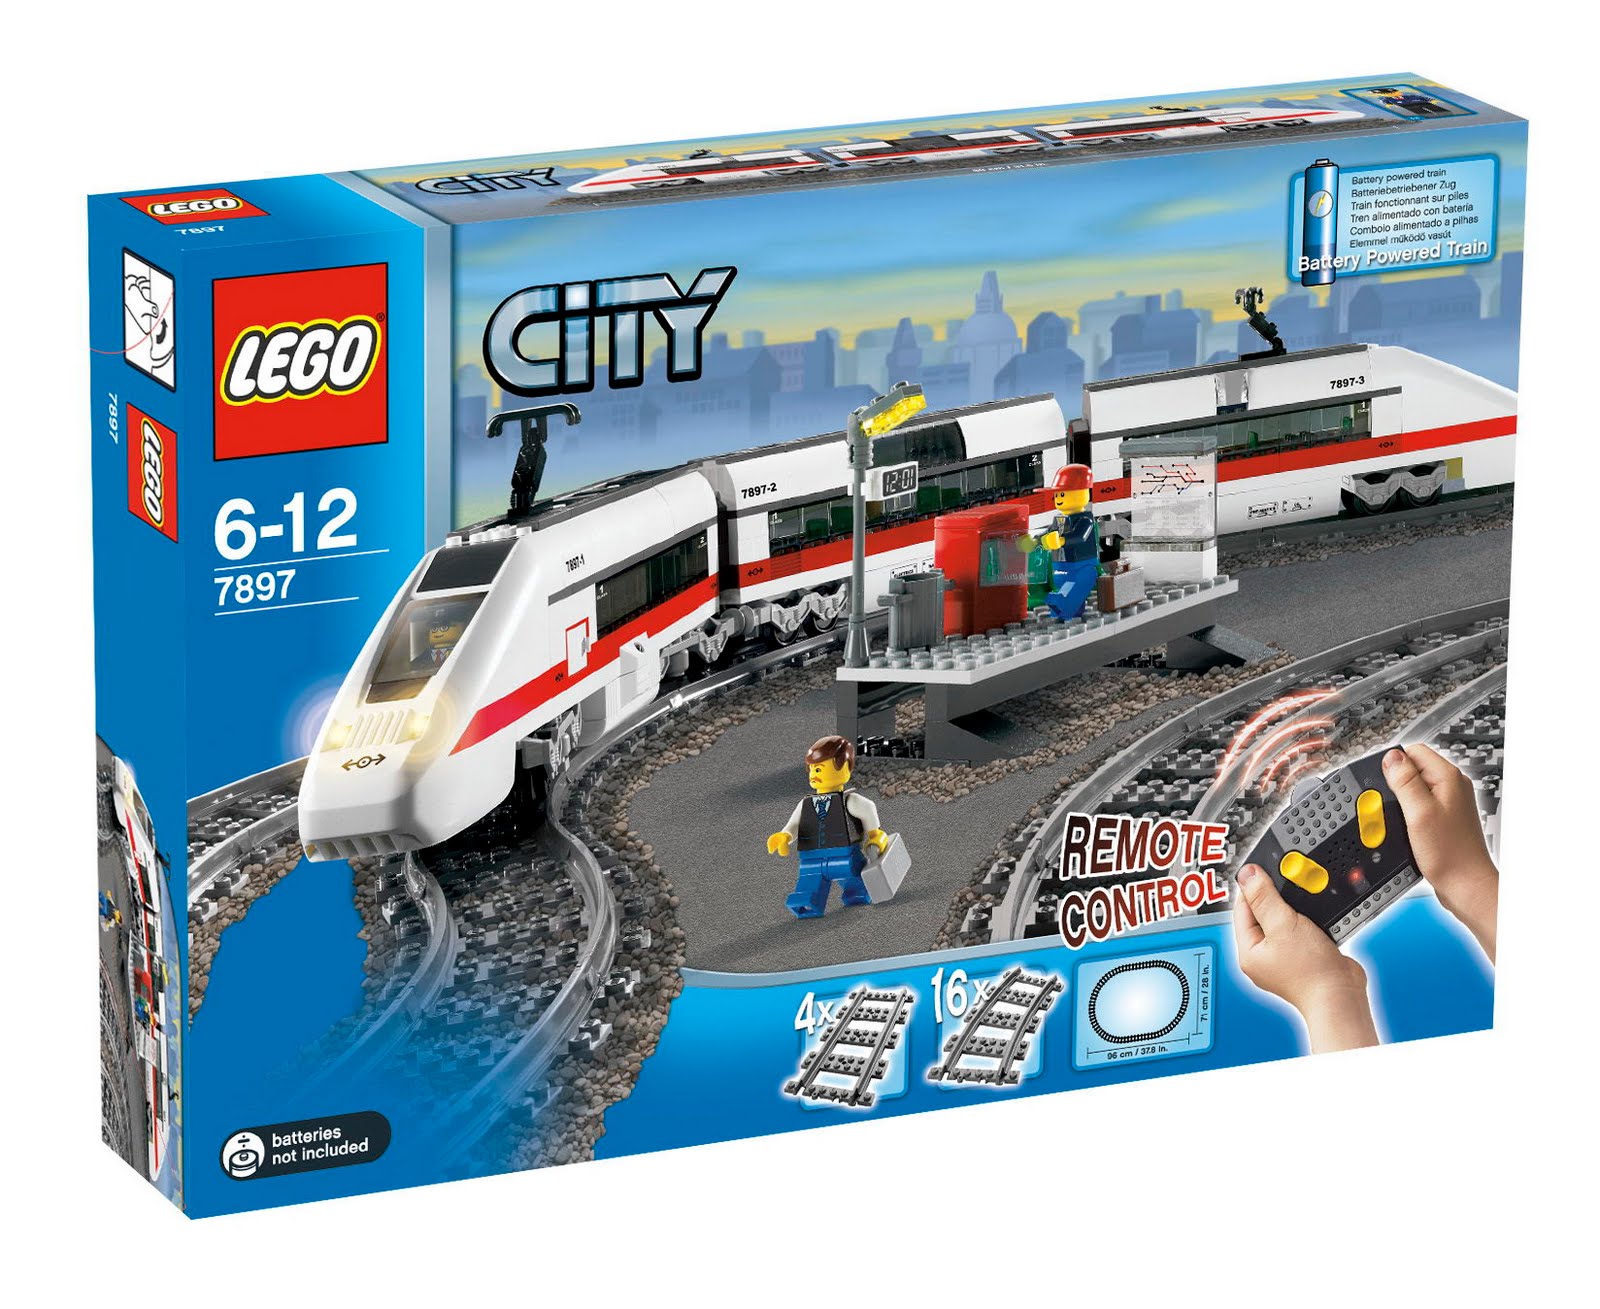 Model railway sets, aztek a320 workhorse airbrush set, lego train set ...